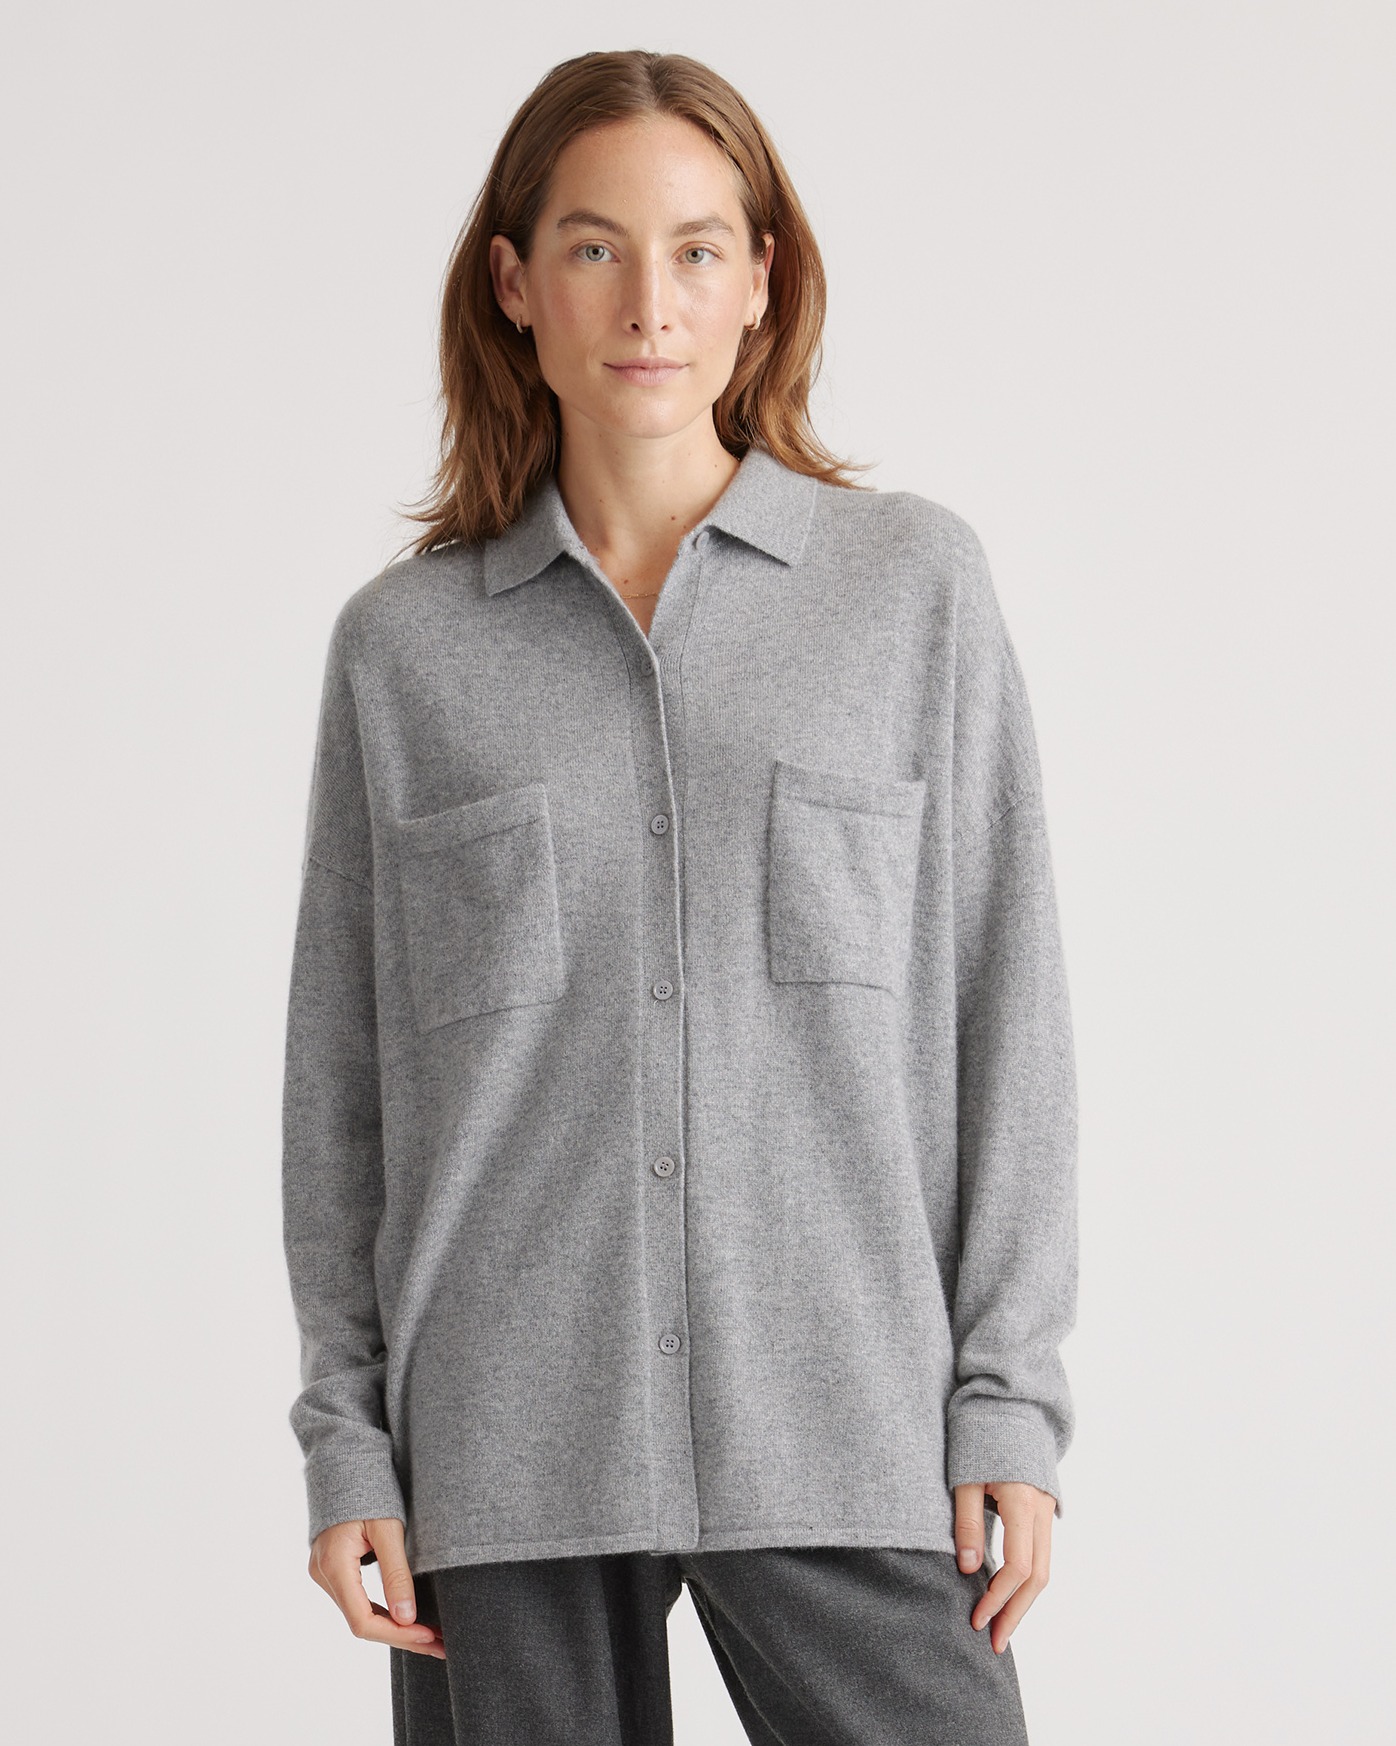 Quince Women's Black Mongolian Cashmere V-Neck Sweater sz M NWT Long Sleeve  Soft